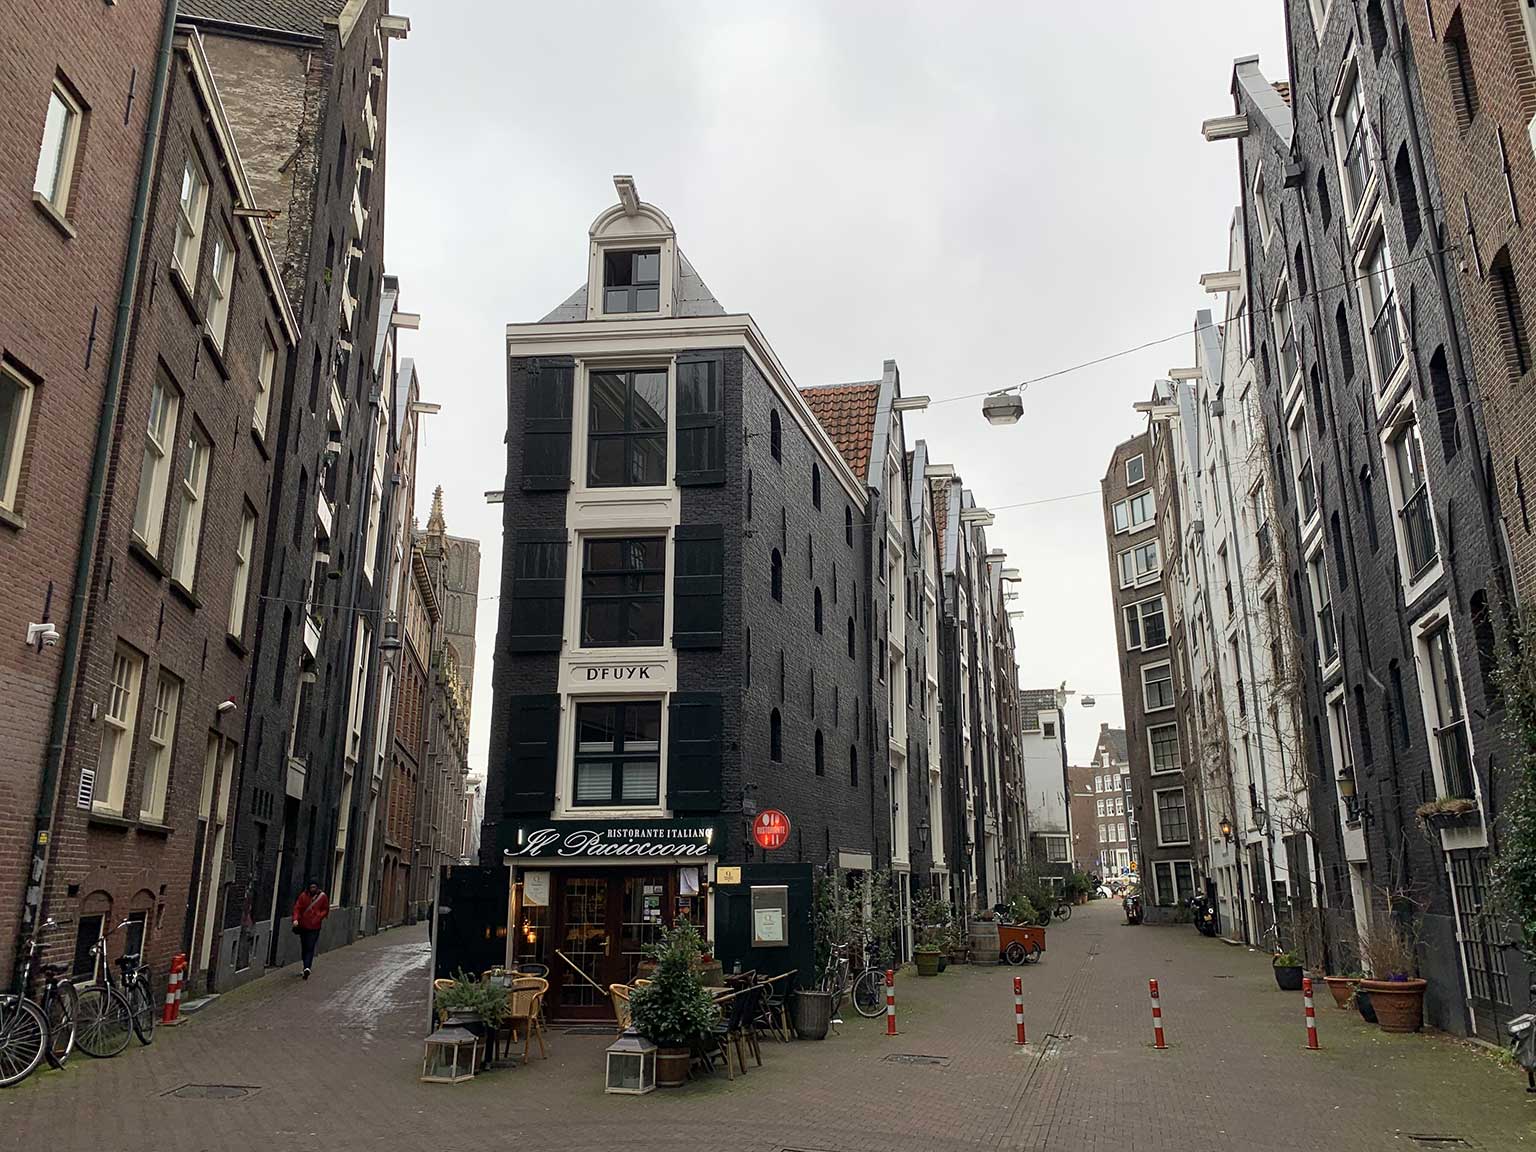 Koggestraat and Teerketelsteeg, Amsterdam